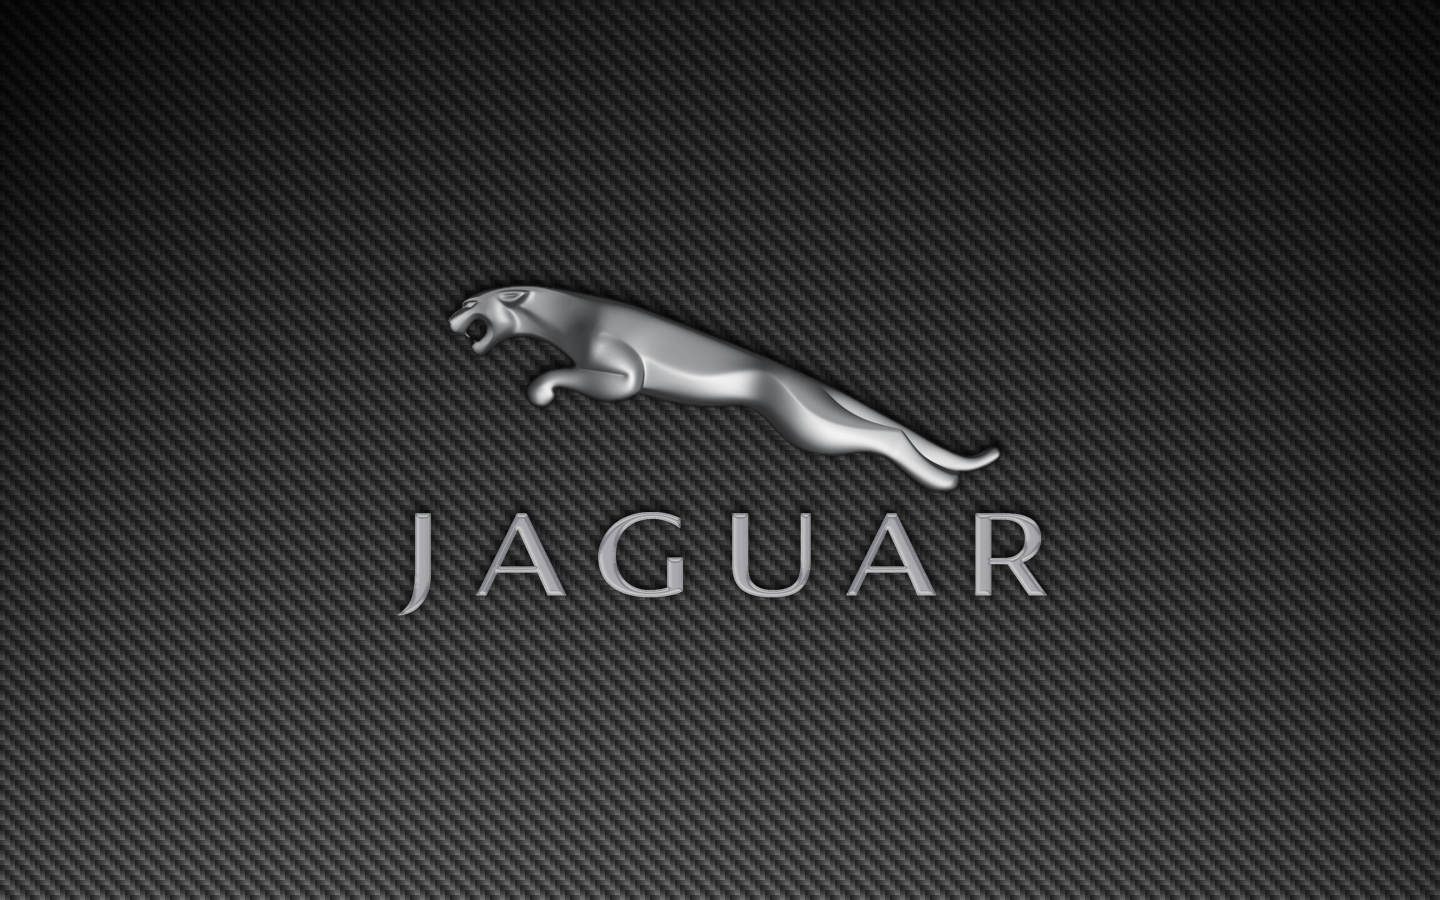 Jaguar Logo, Jaguar Car Symbol Meaning and History. Car Brand